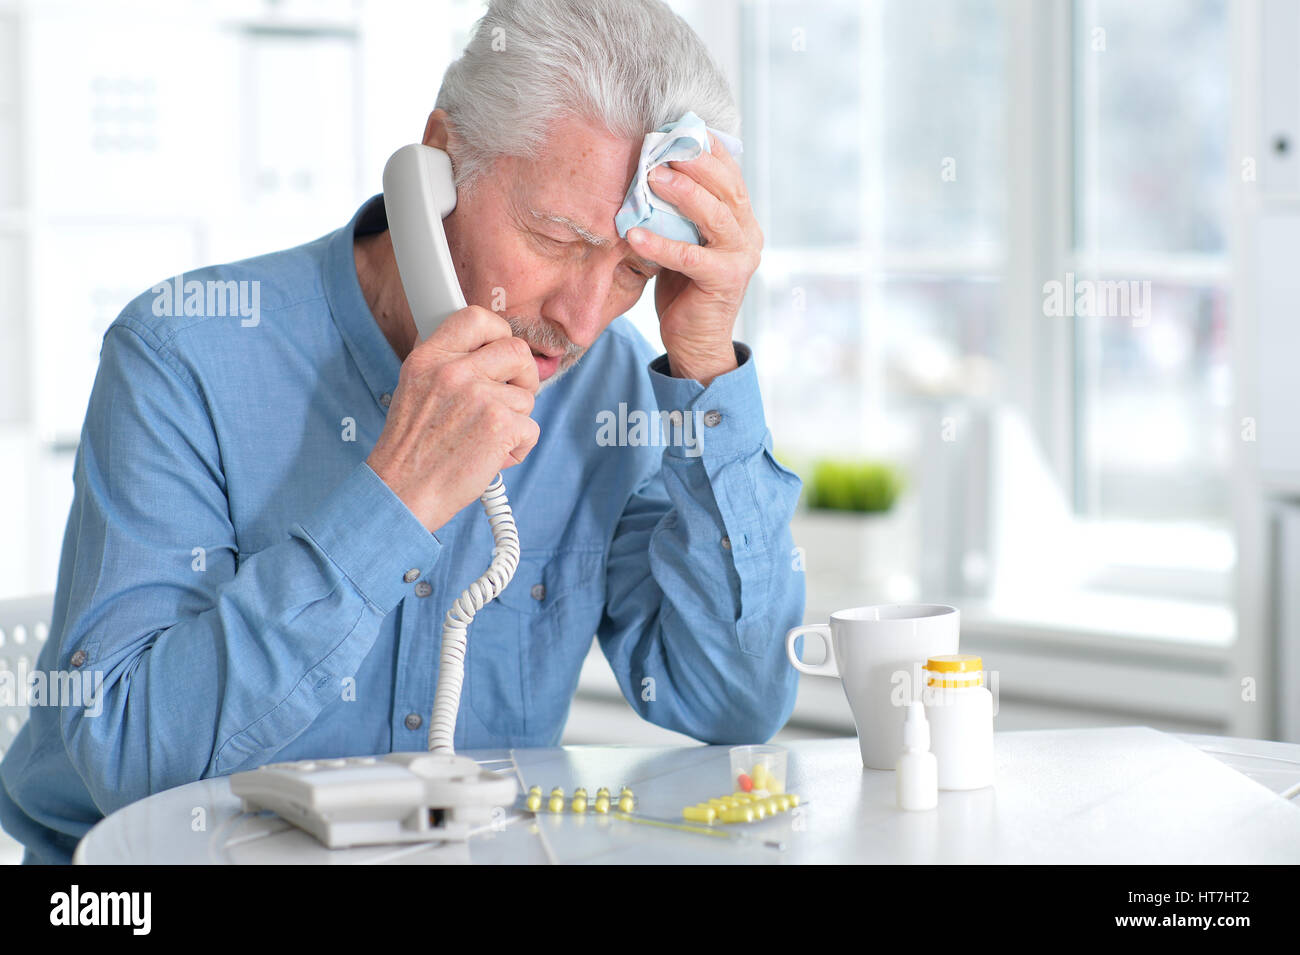 Sick elderly man calling by phone Stock Photo